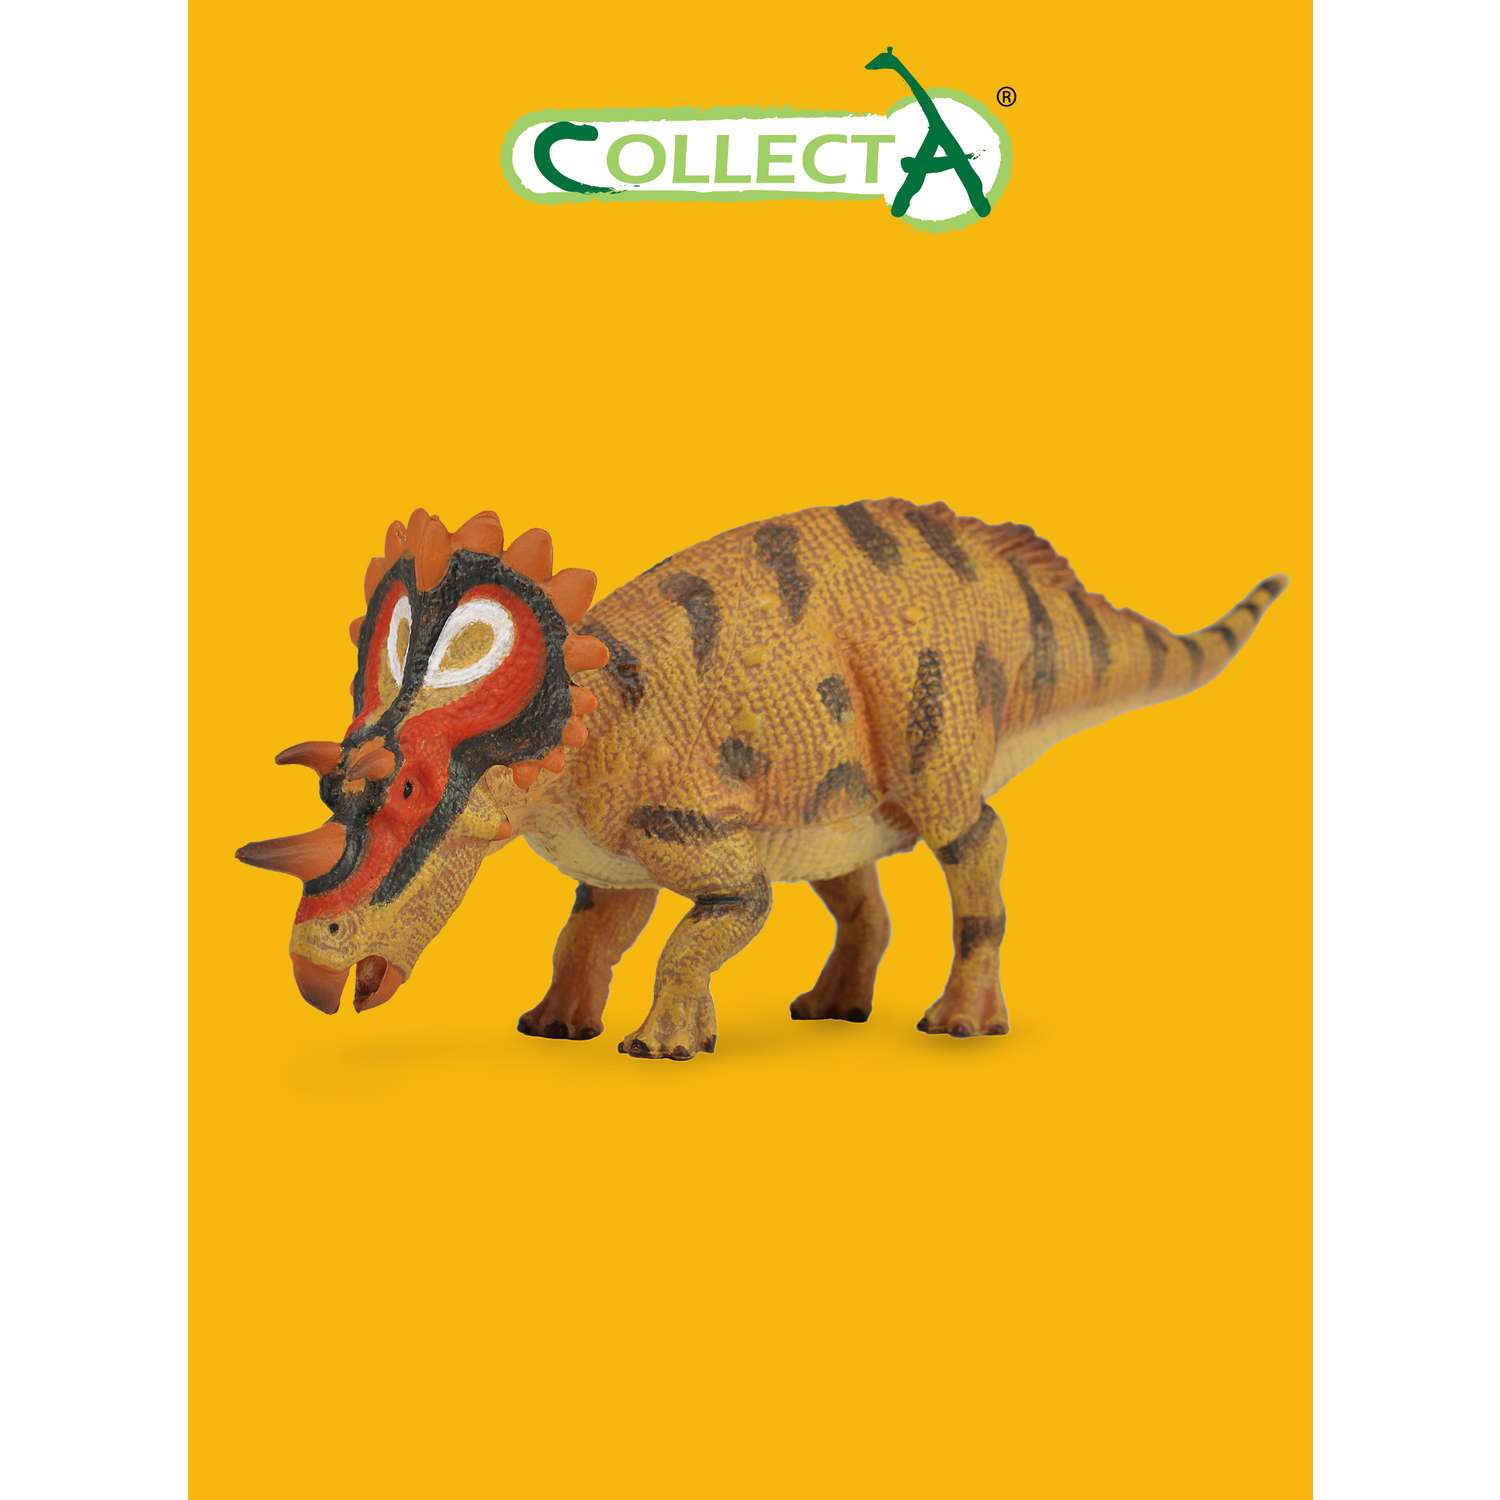 Игрушка Collecta Регалицератопс фигурка динозавра - фото 1